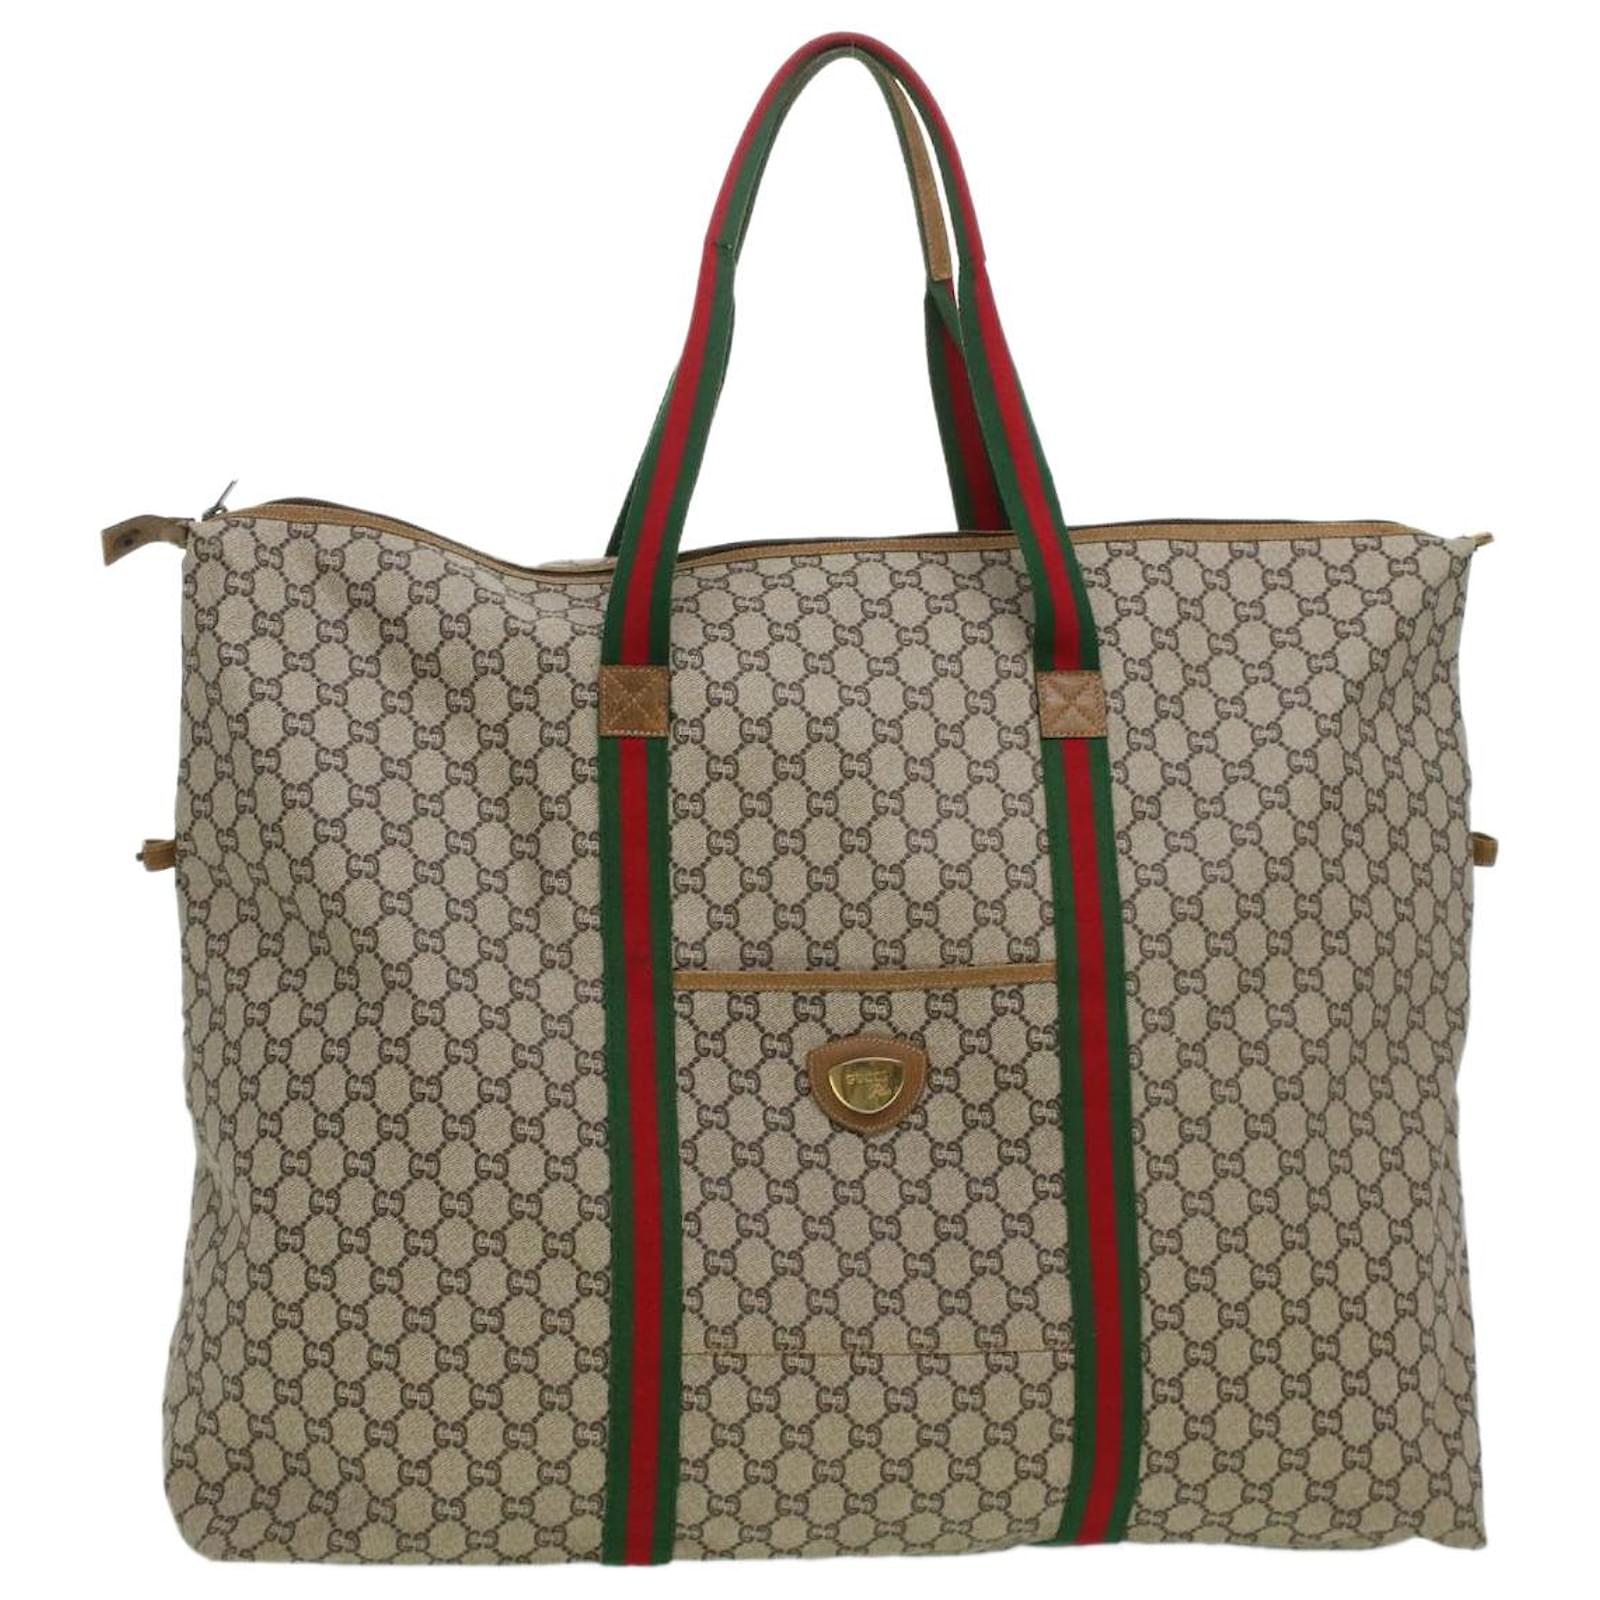 Authentic Gucci GG Boston bag handbag green red + DUSTBAG